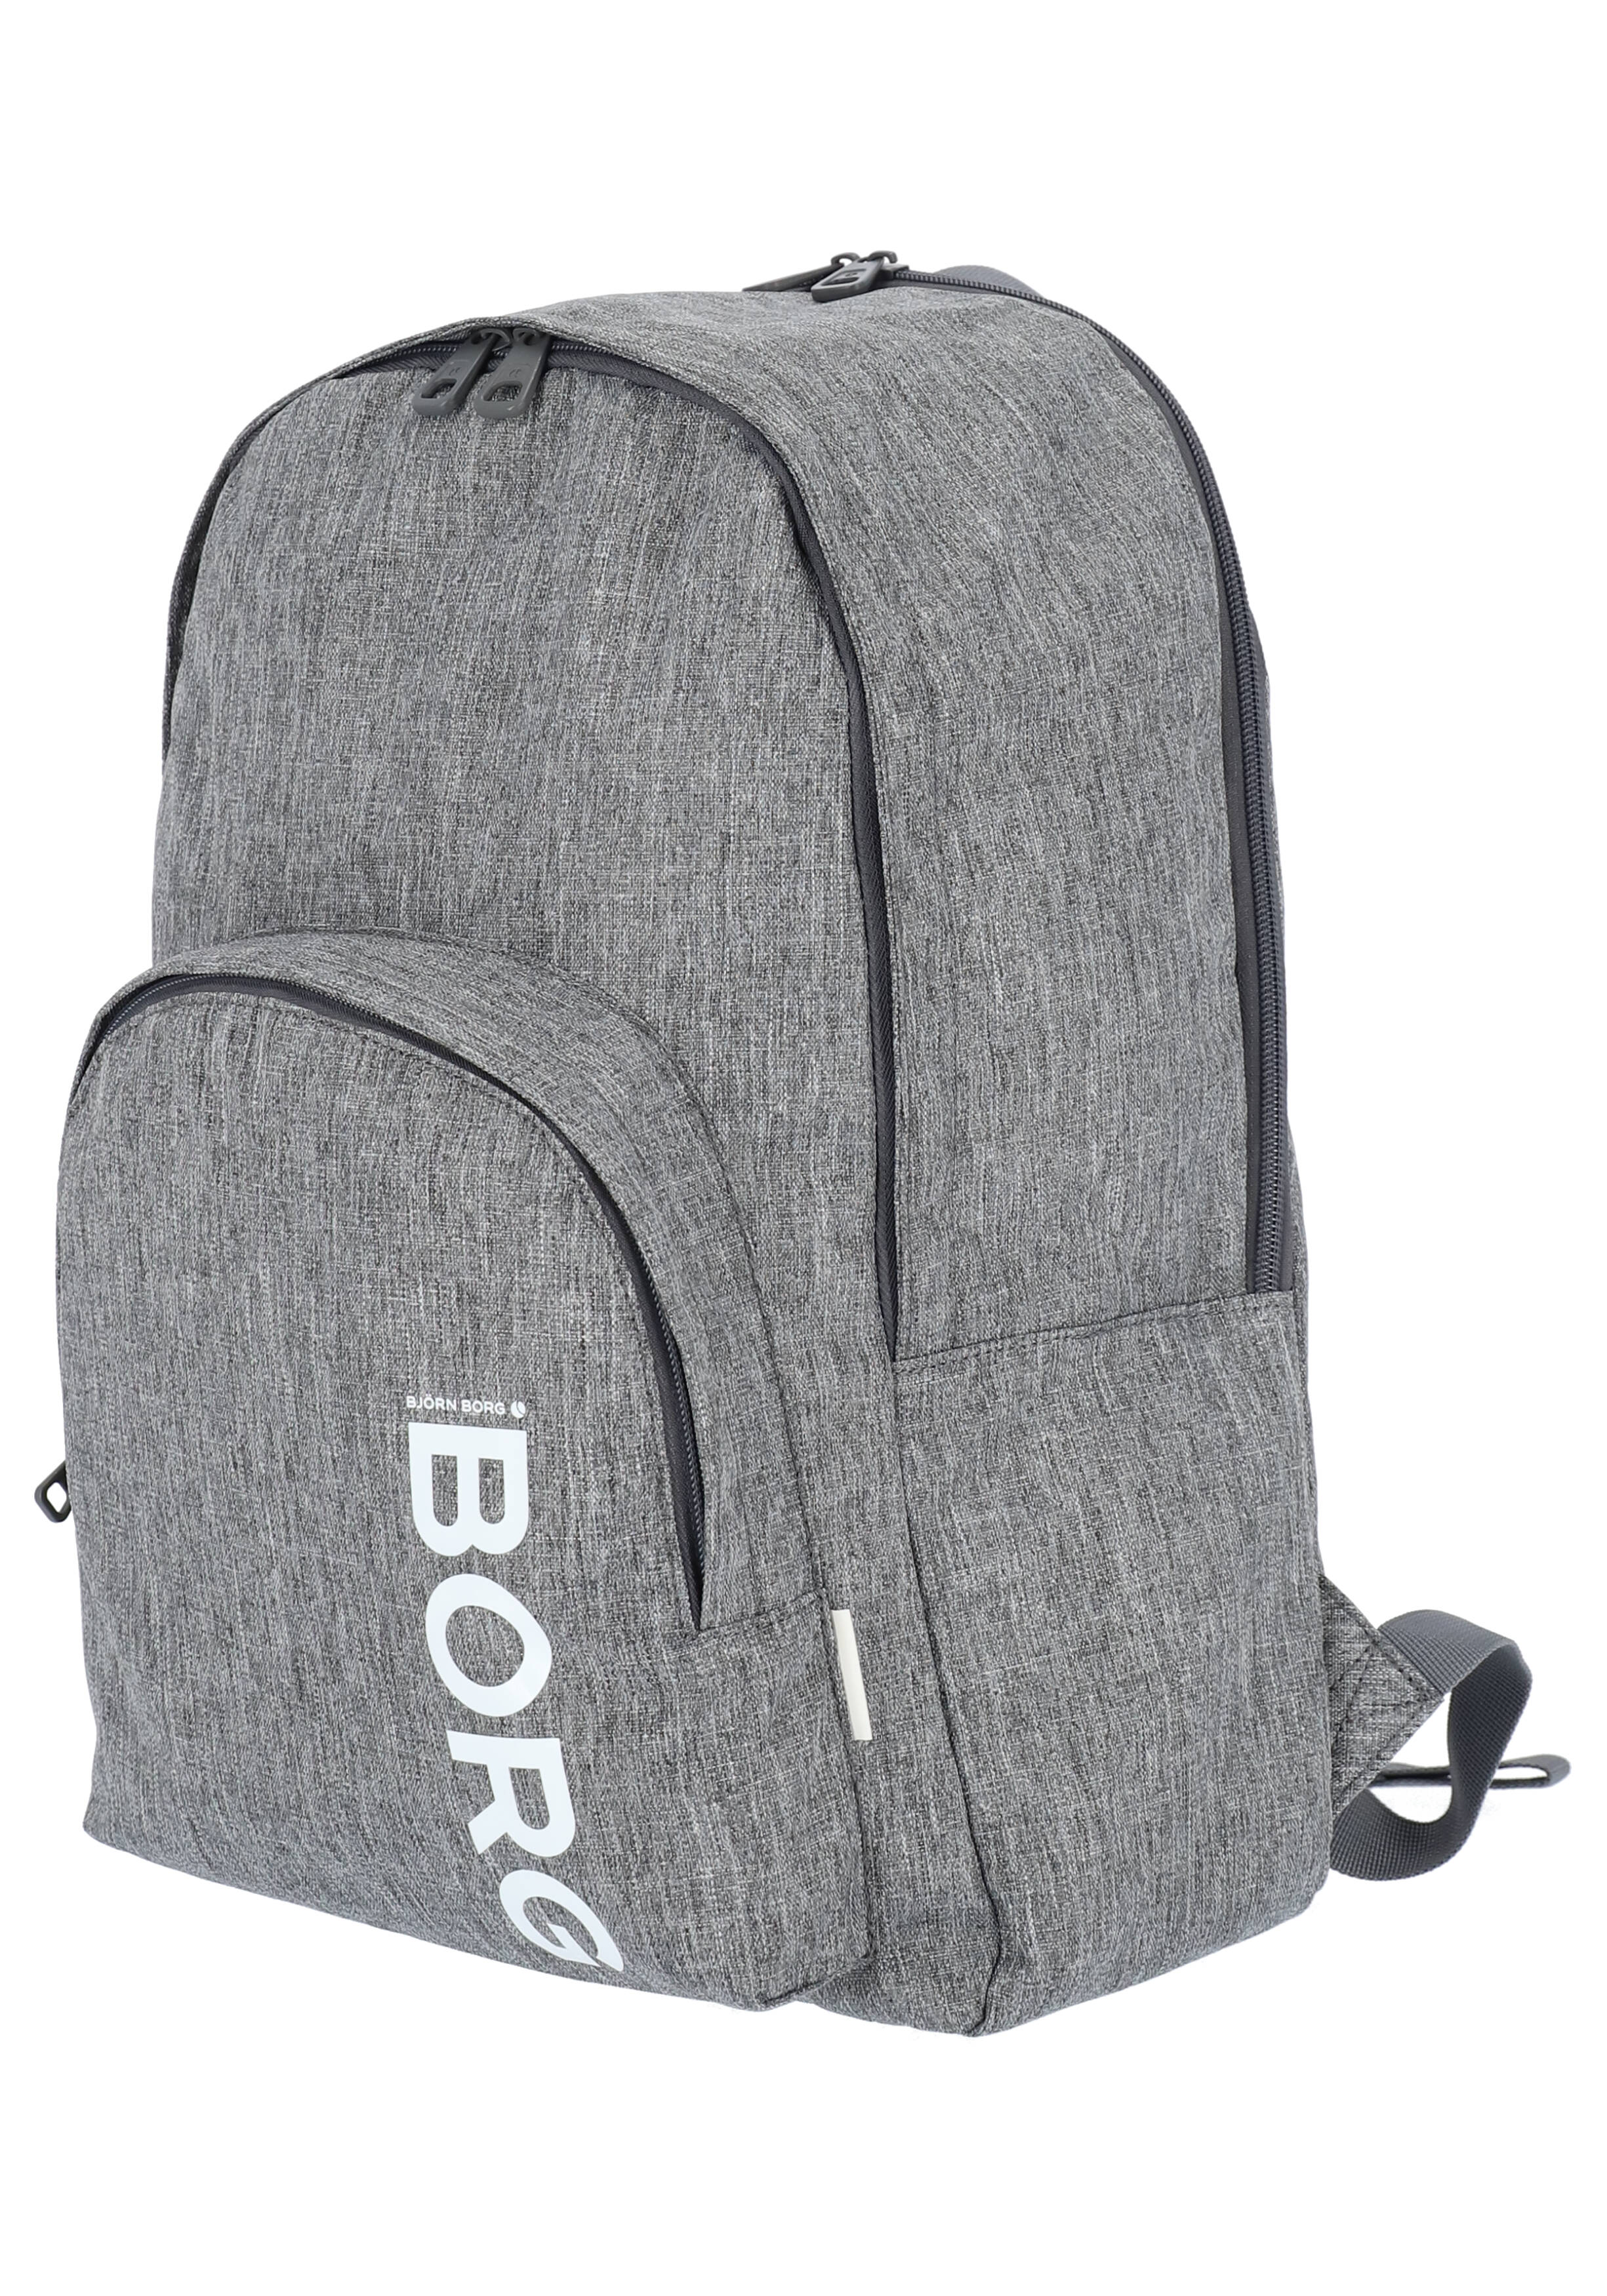 Bjorn Borg Core backpack, unisex rugzak, grijs melange